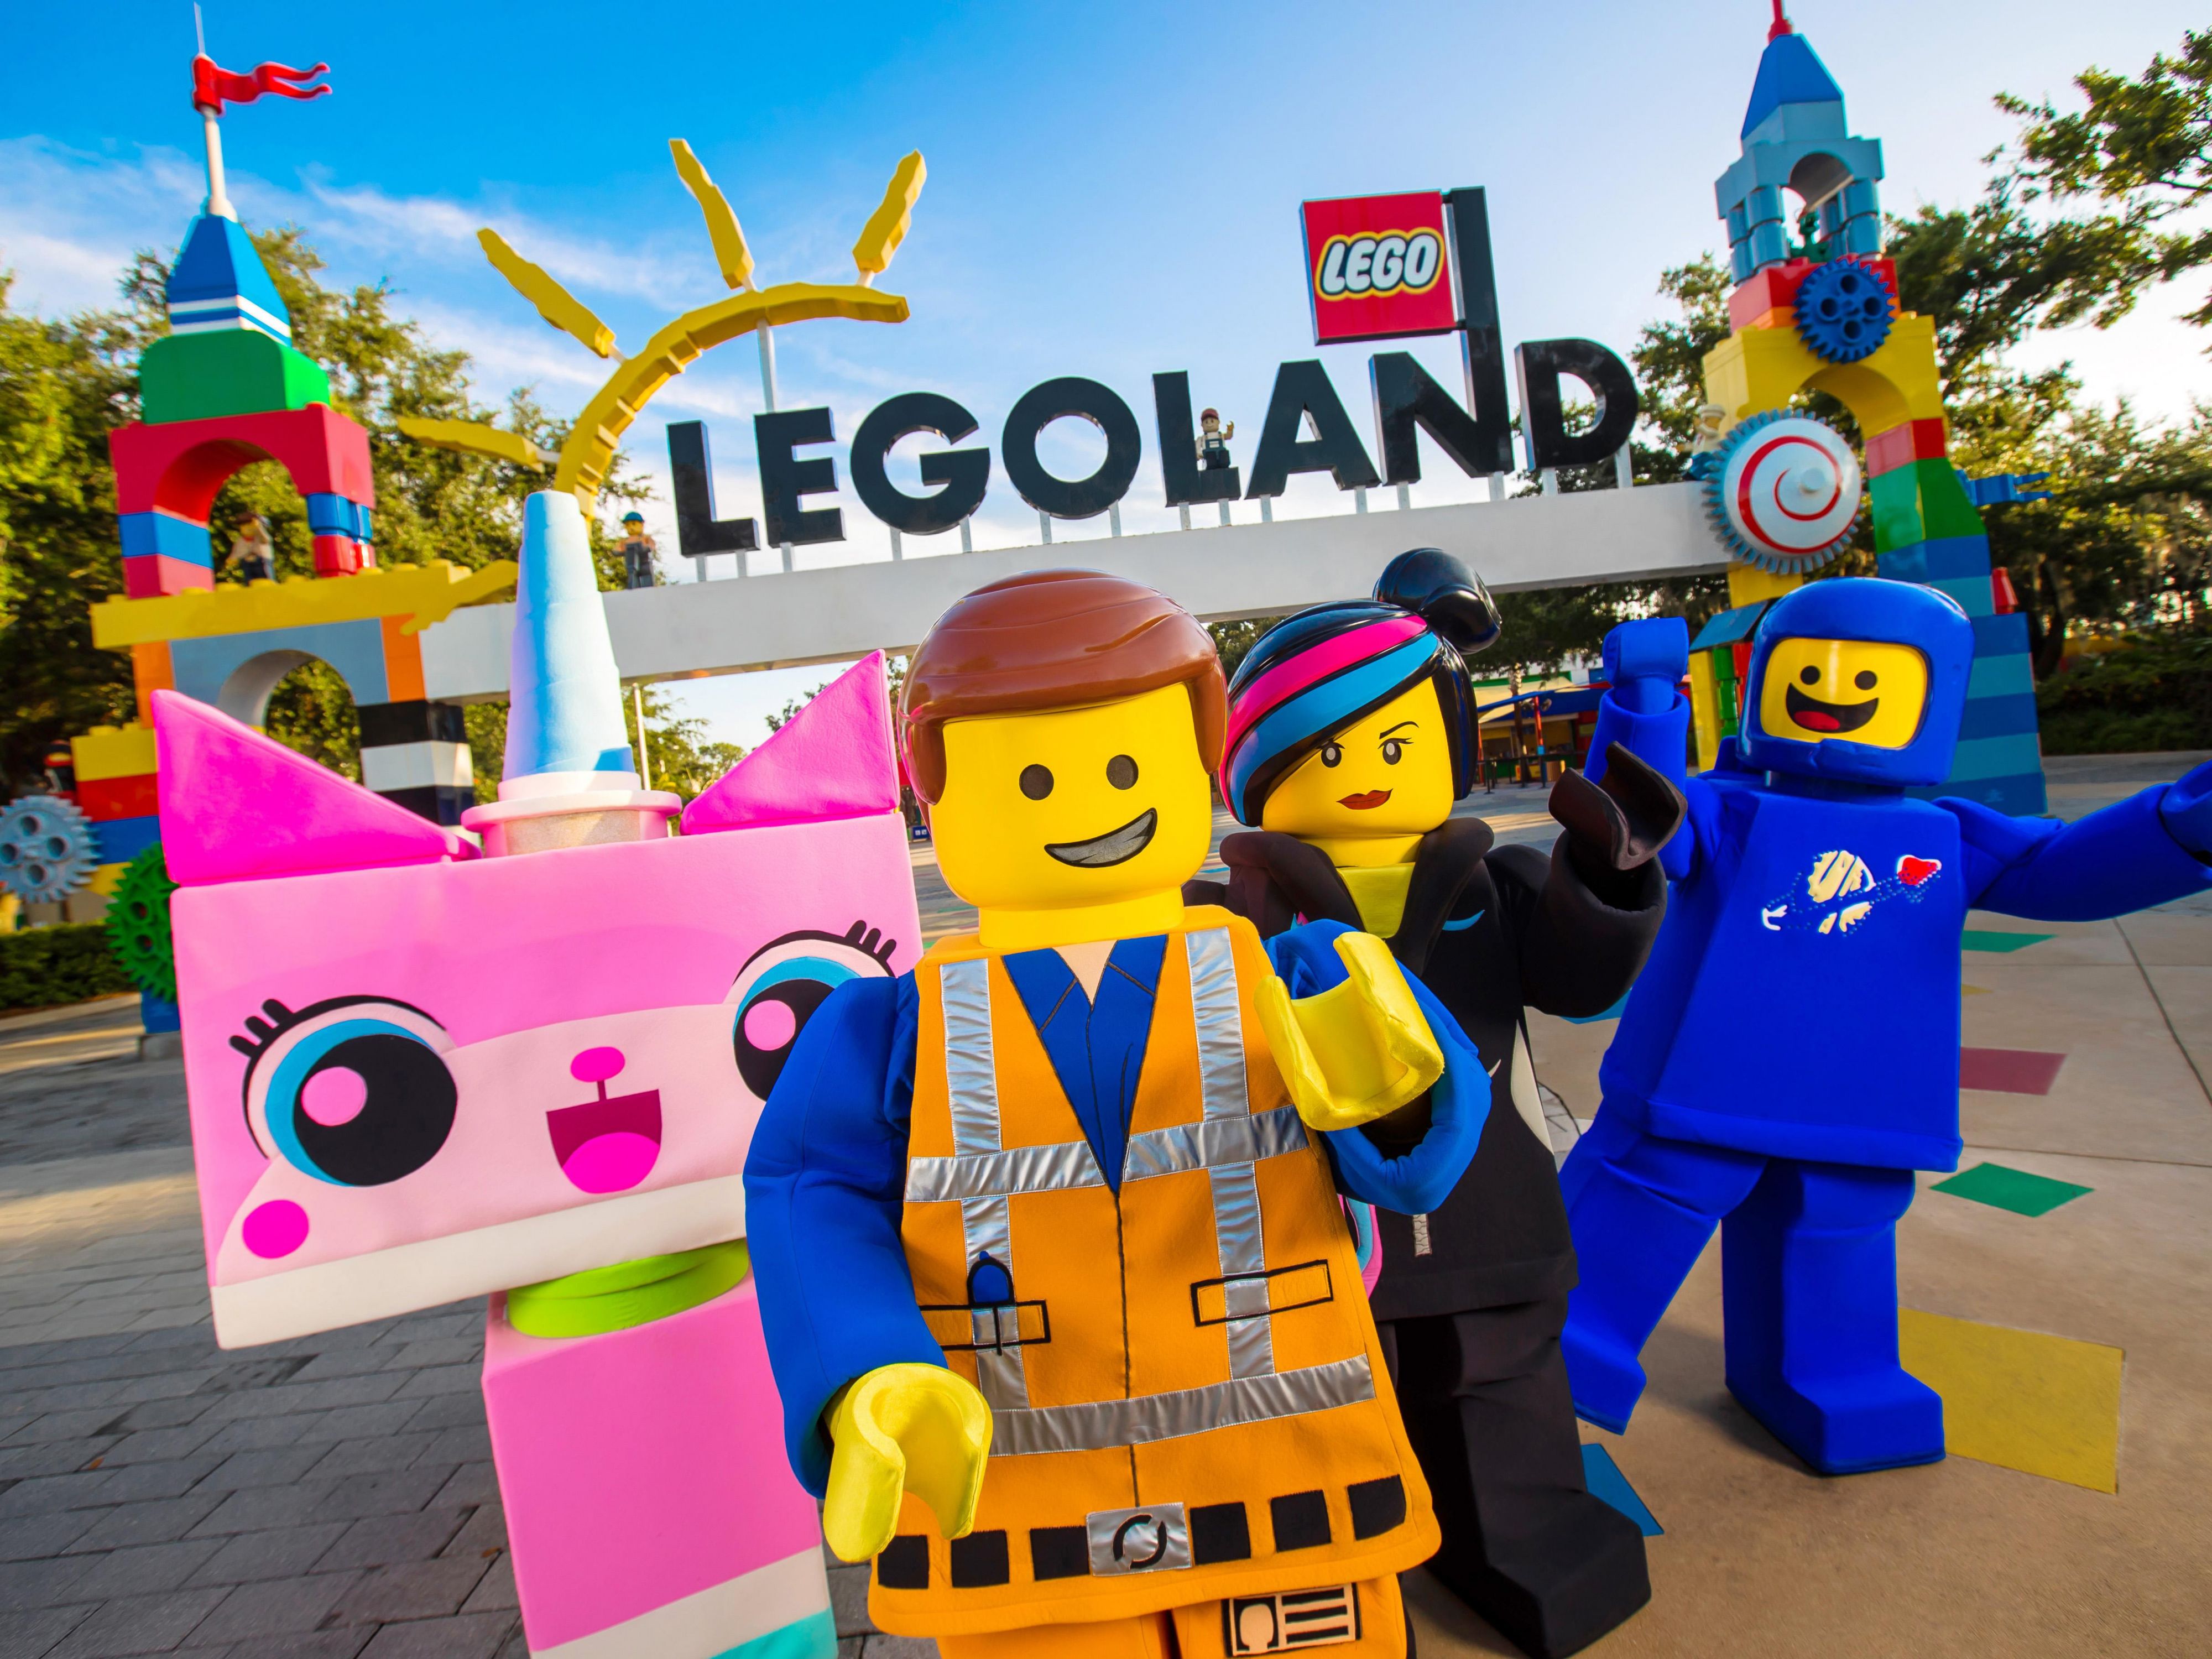 Legoland entrance with Lego characters